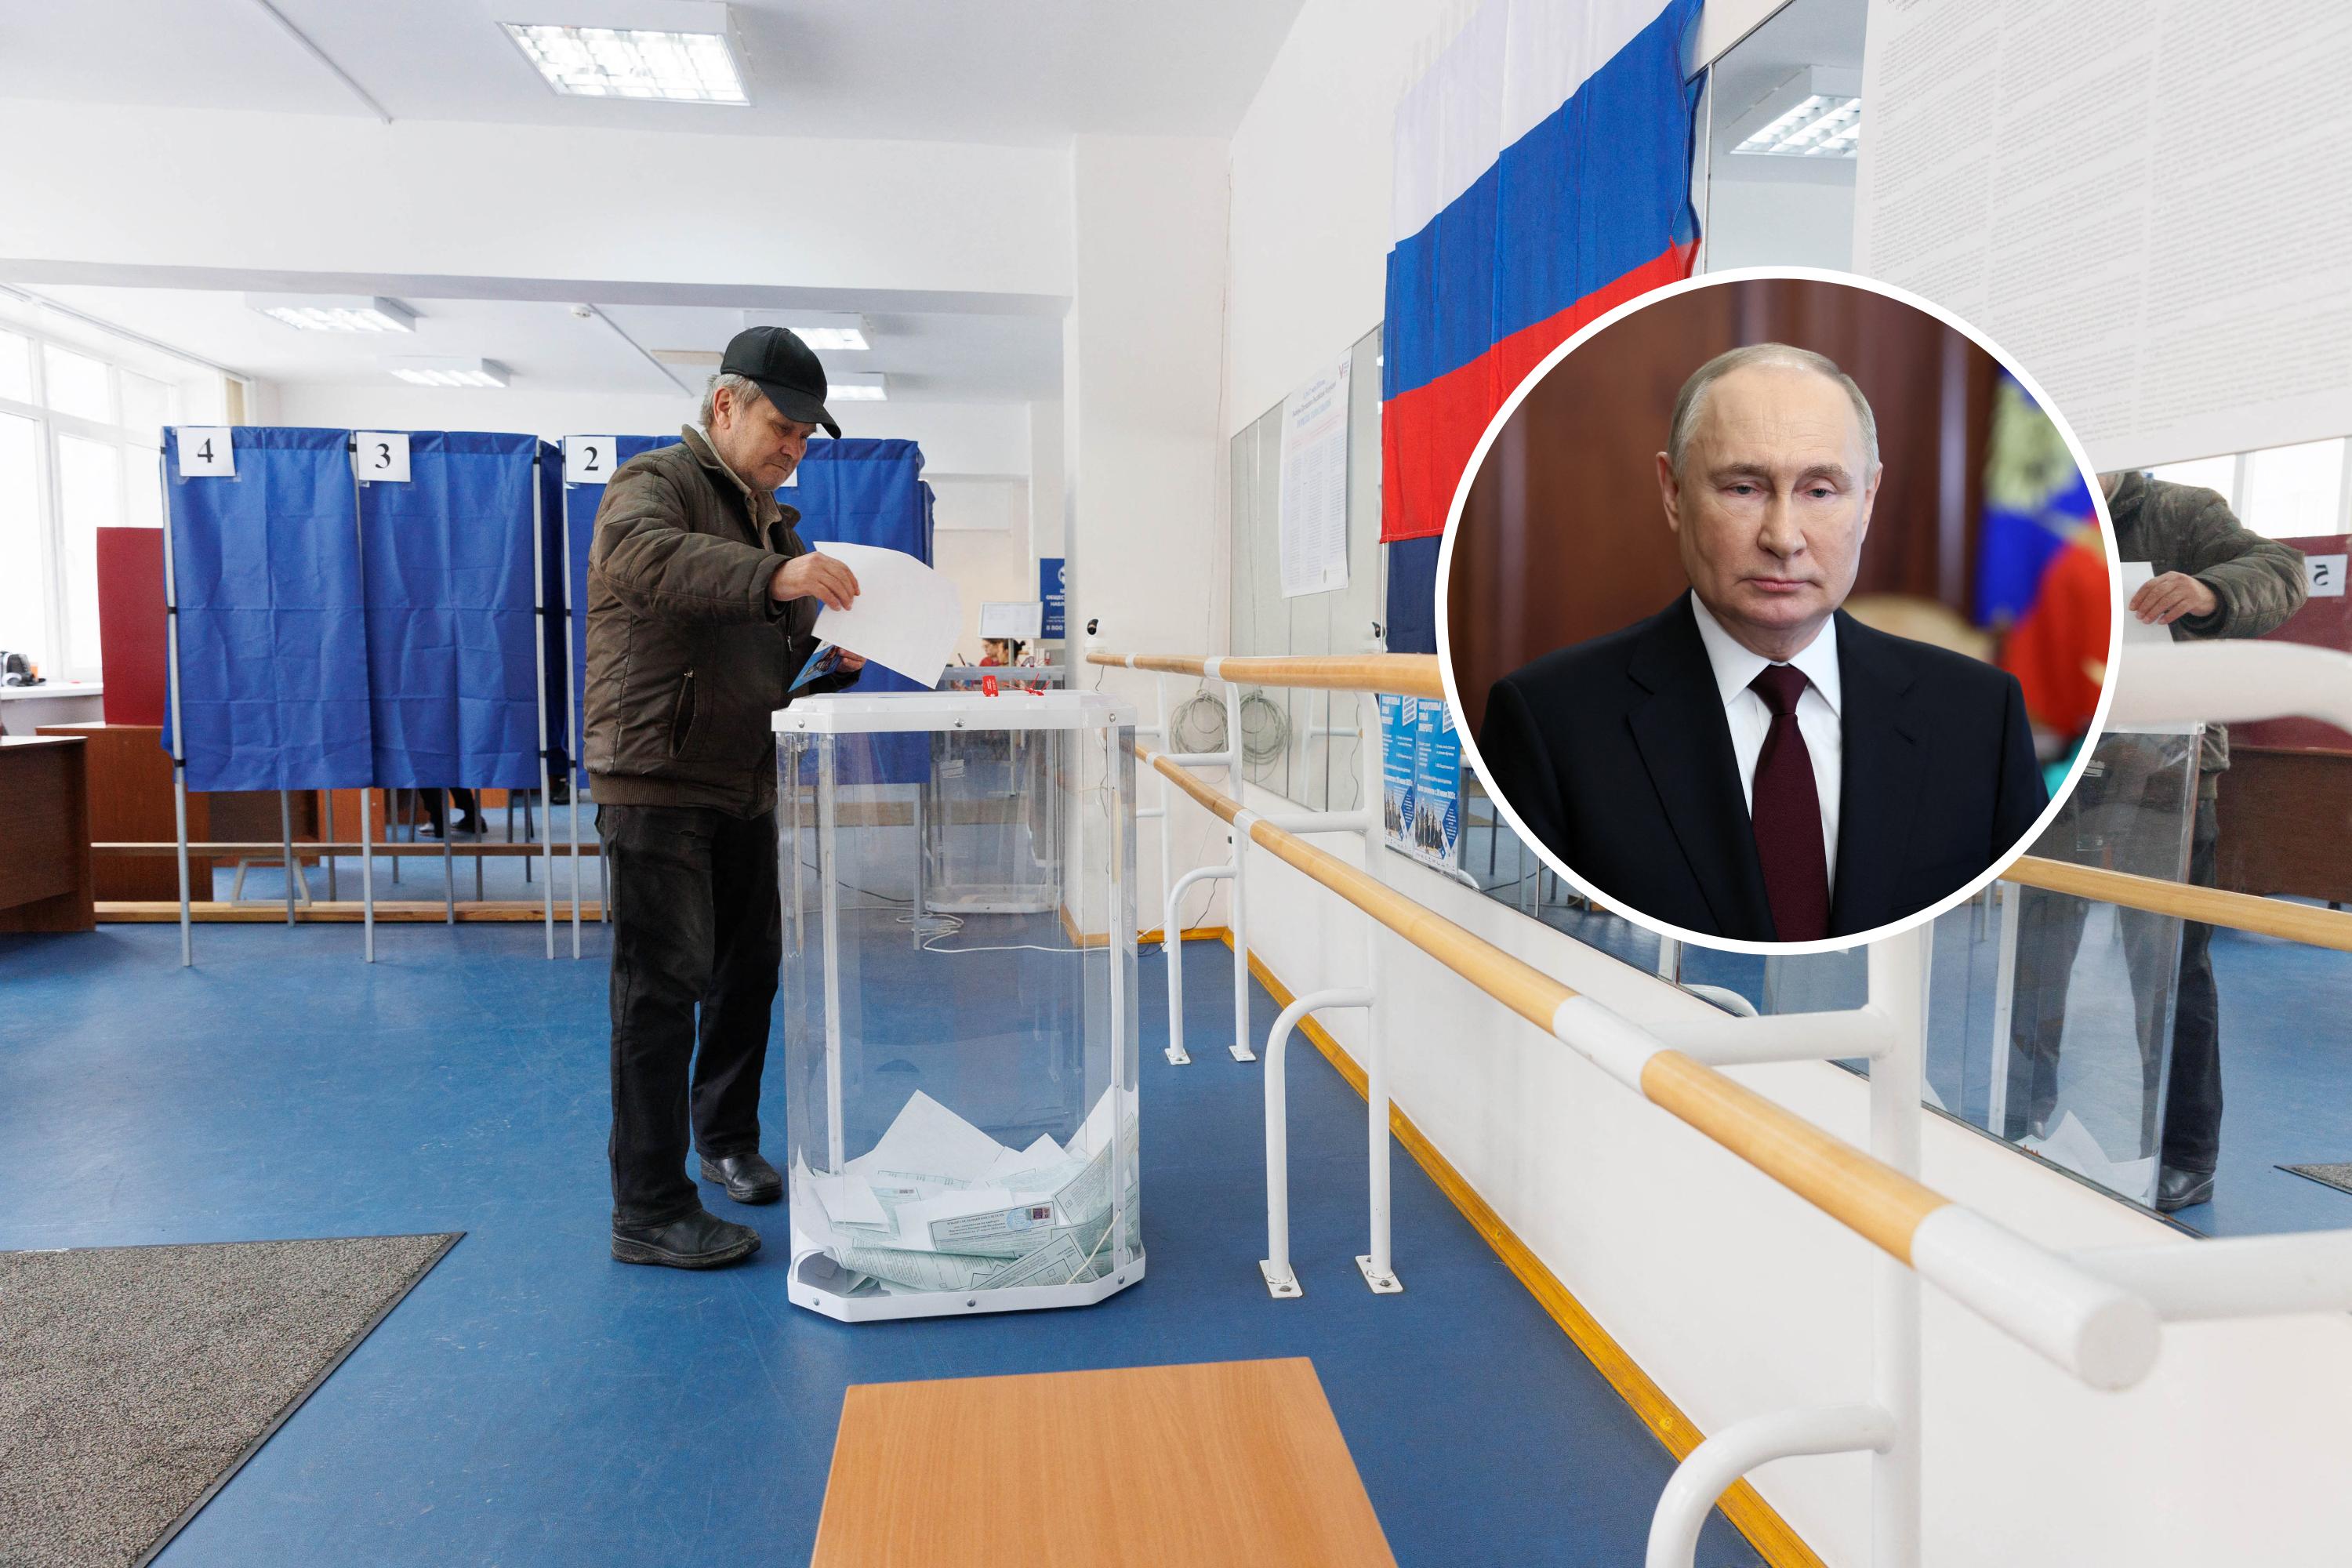 A Russian man voting and Vladimir Putin